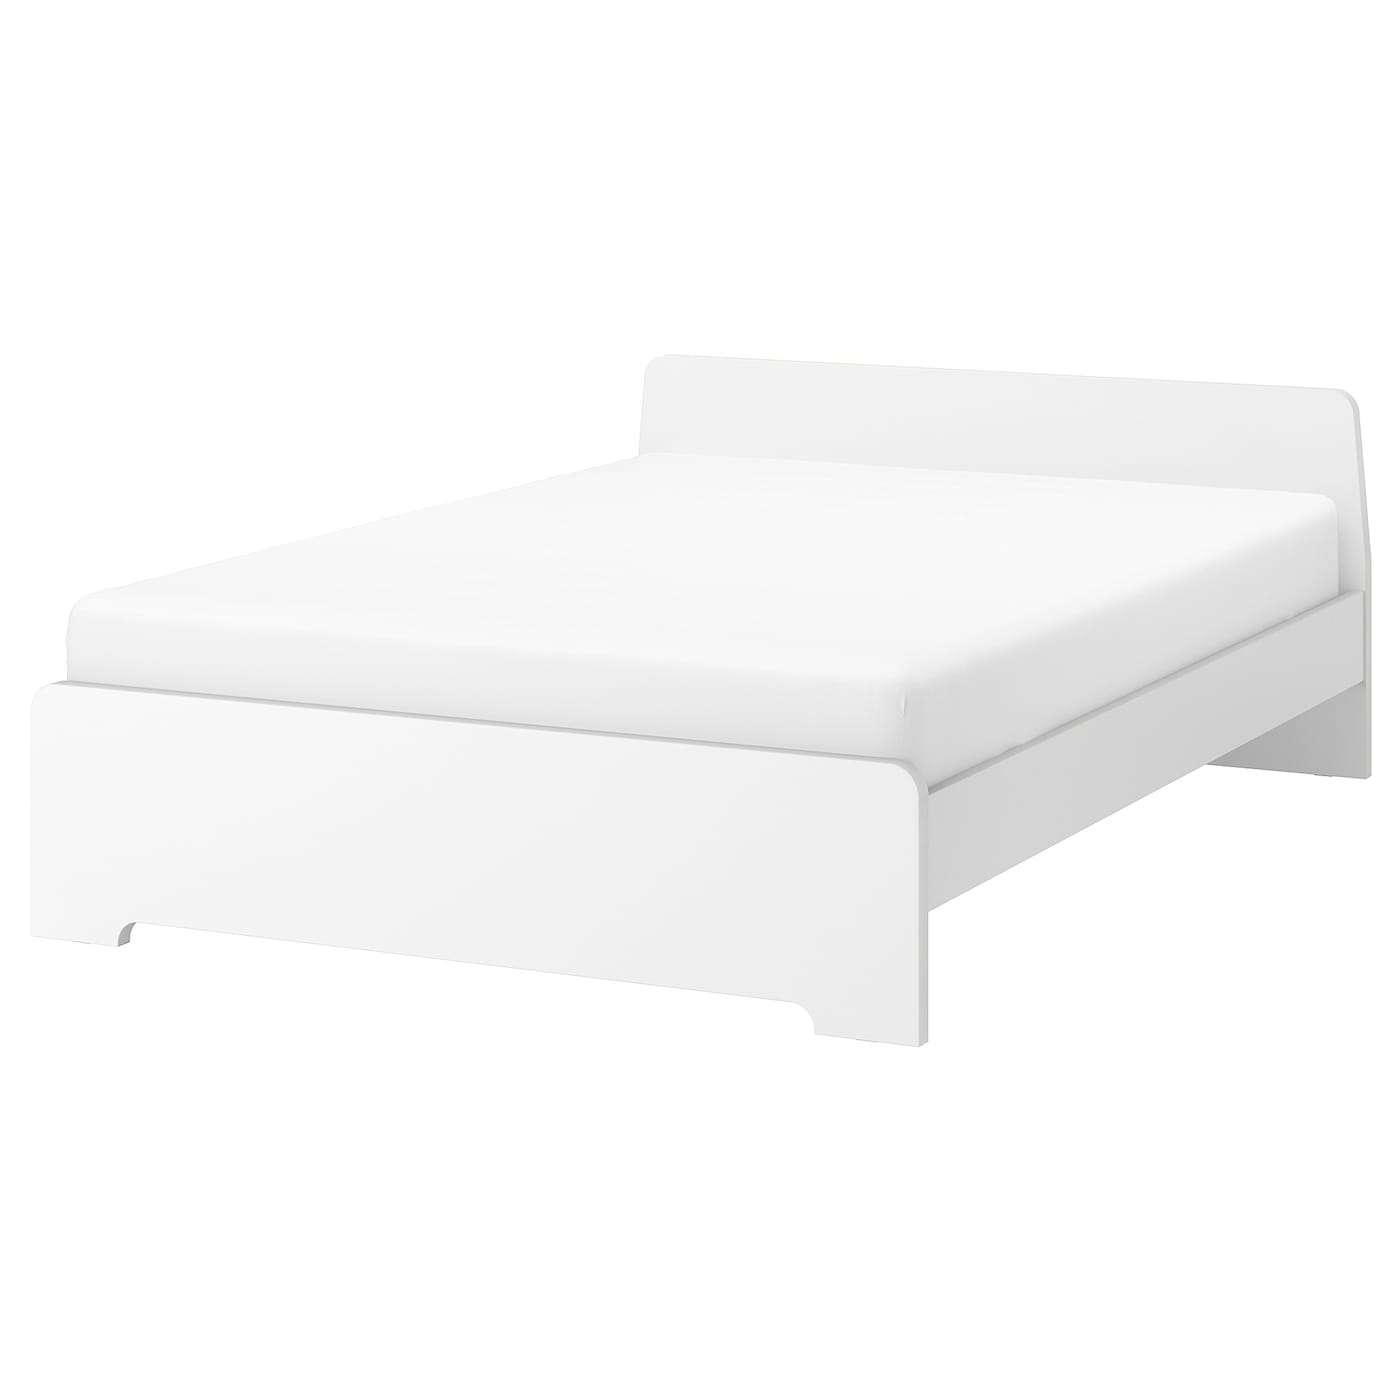 Каркас кровати - IKEA ASKVOLL, 200х140 см, белый, АСКВОЛЛЬ ИКЕА